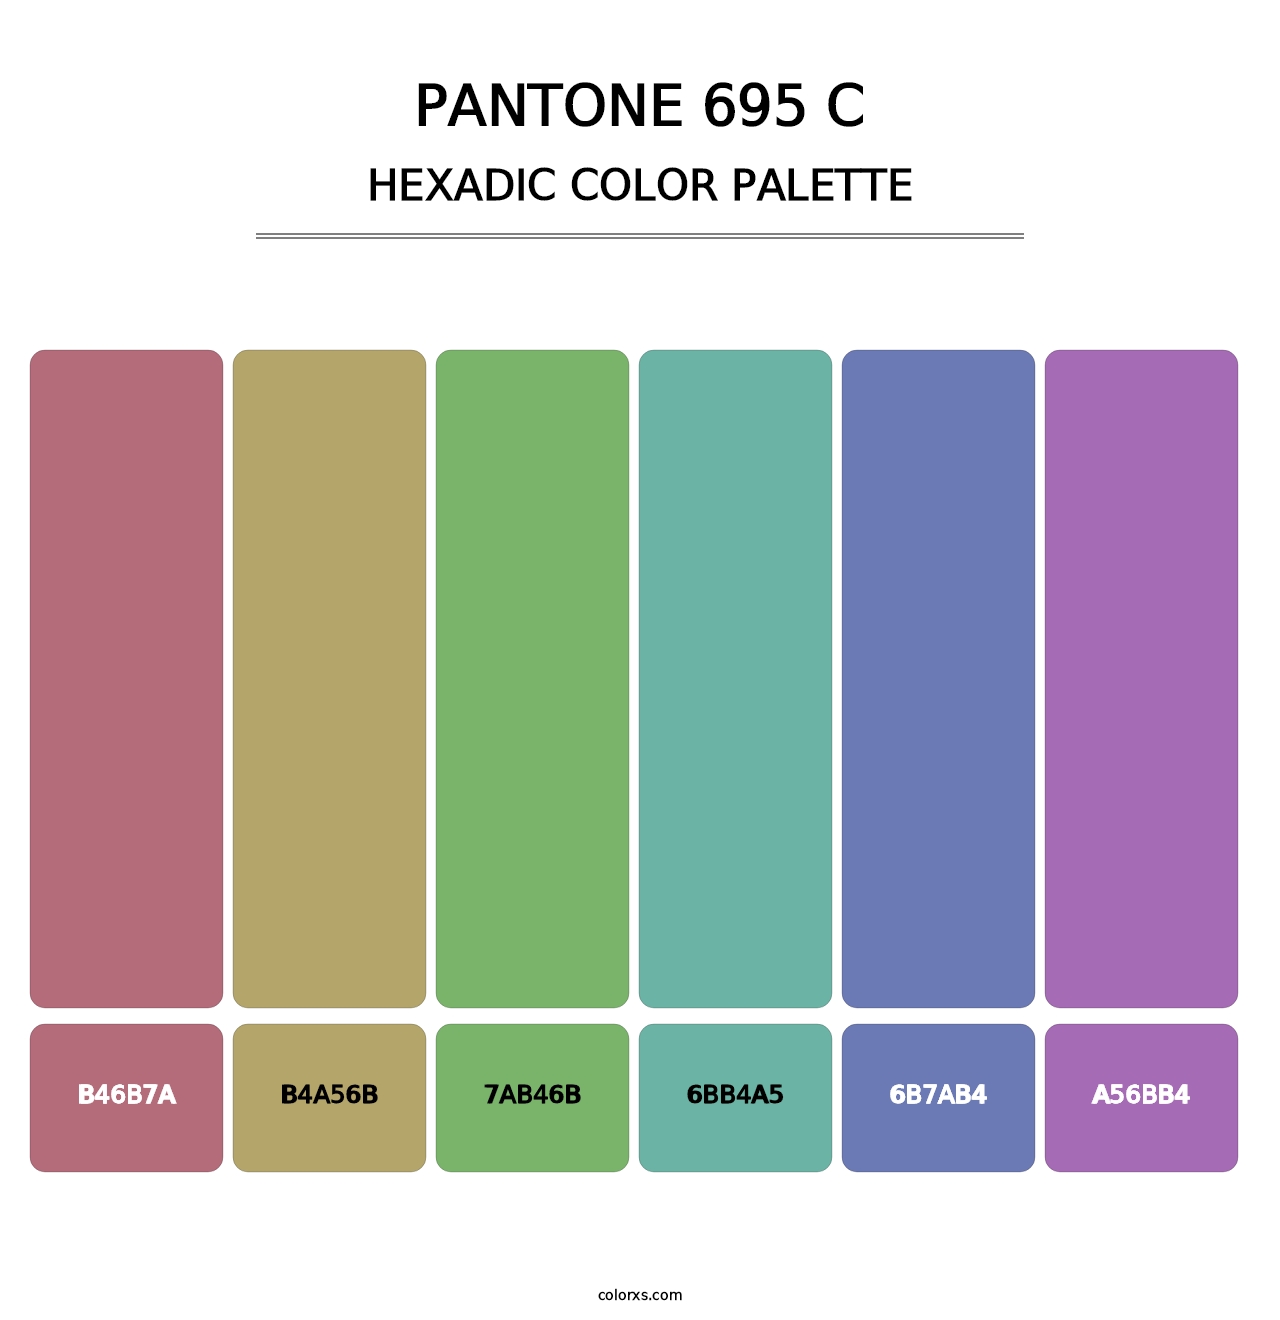 PANTONE 695 C - Hexadic Color Palette